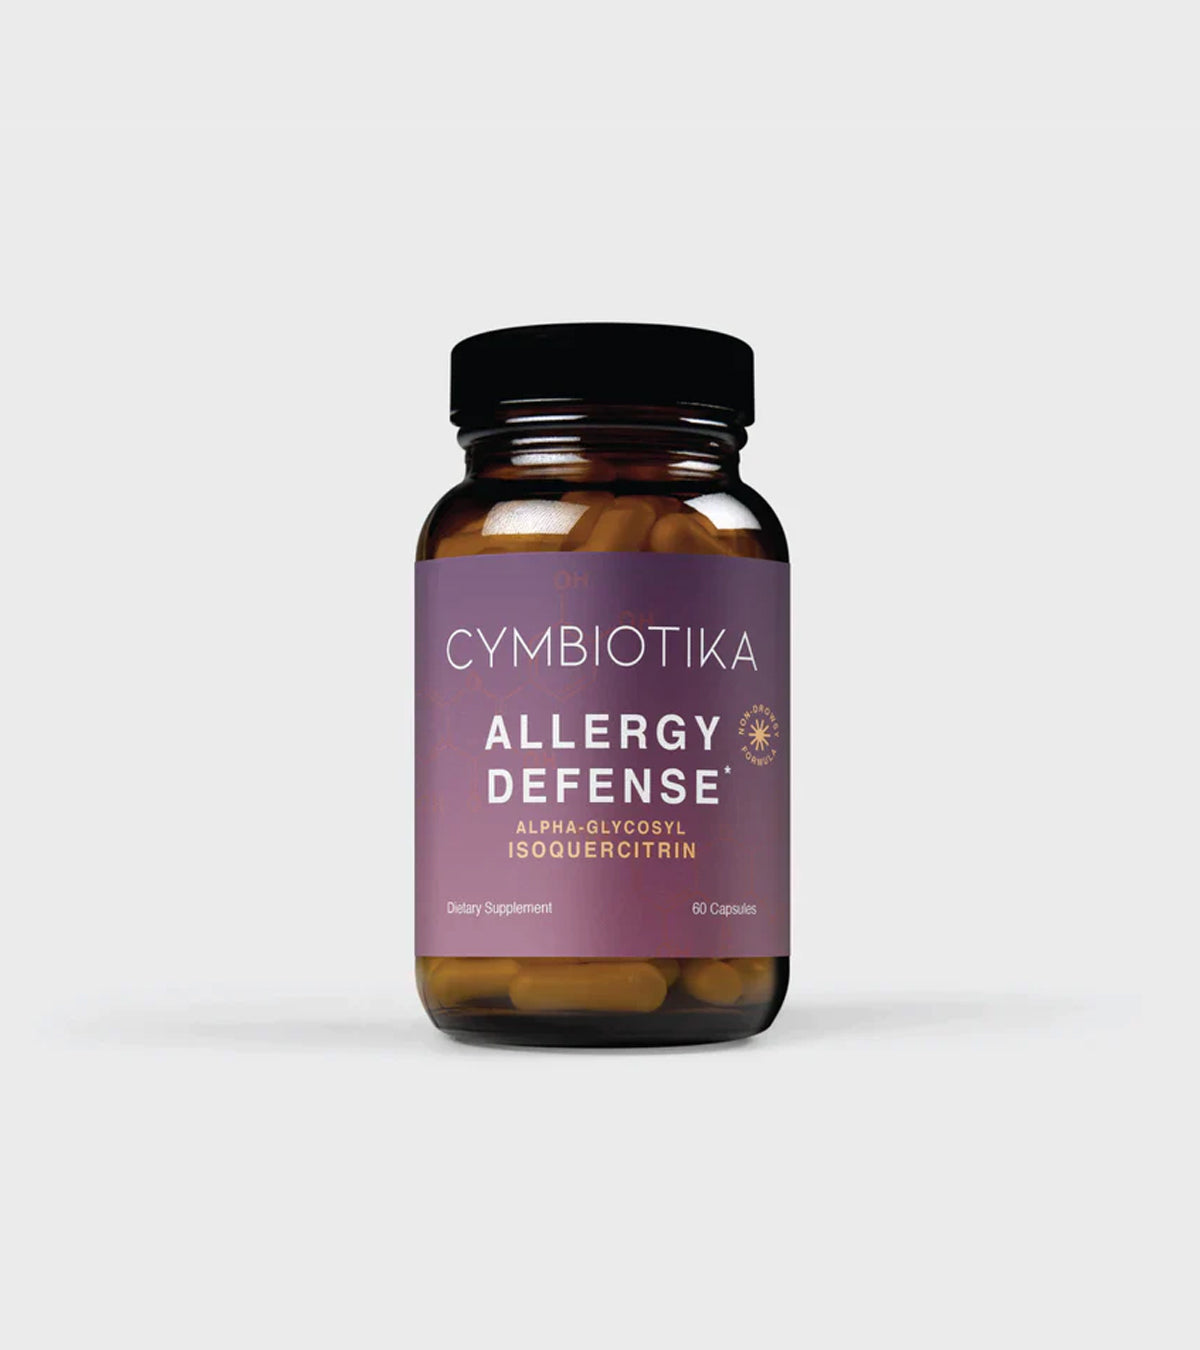 Allergy Defense